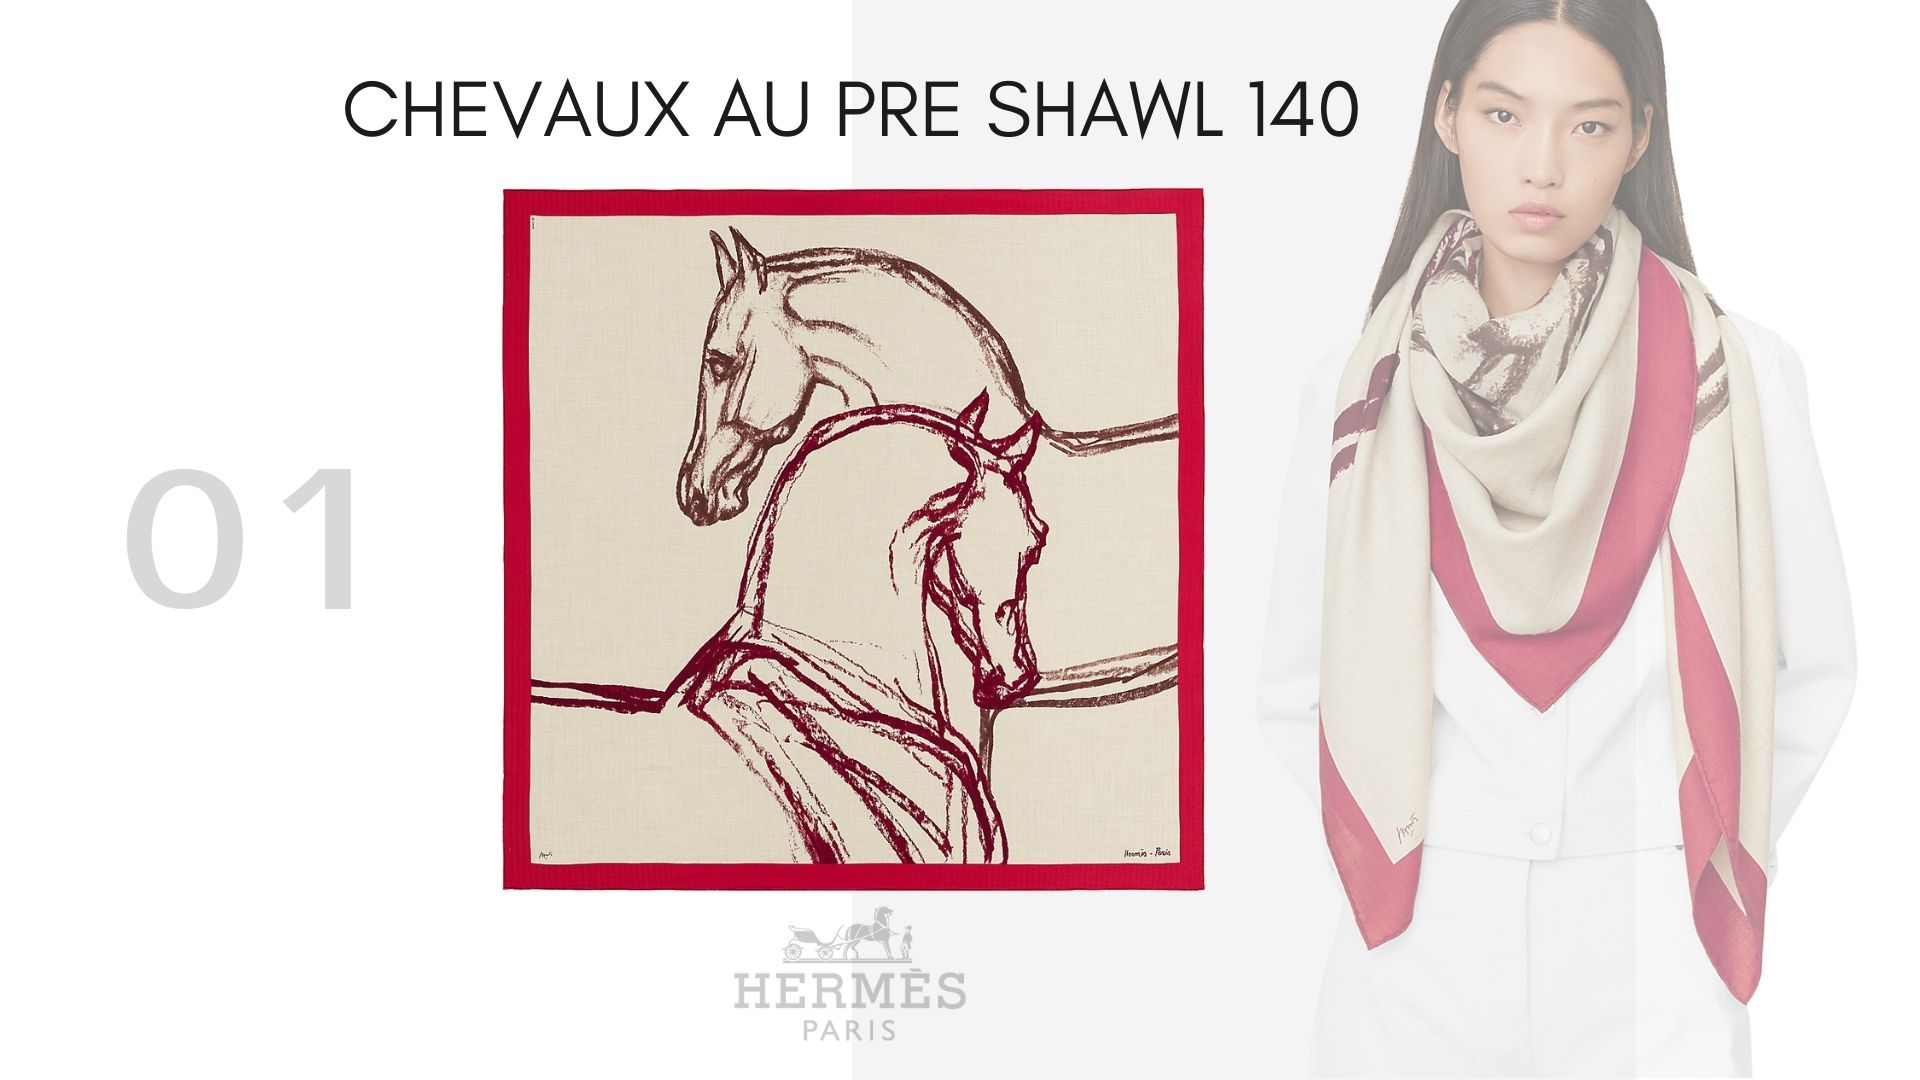 Chevaux Au Pre shawl 140